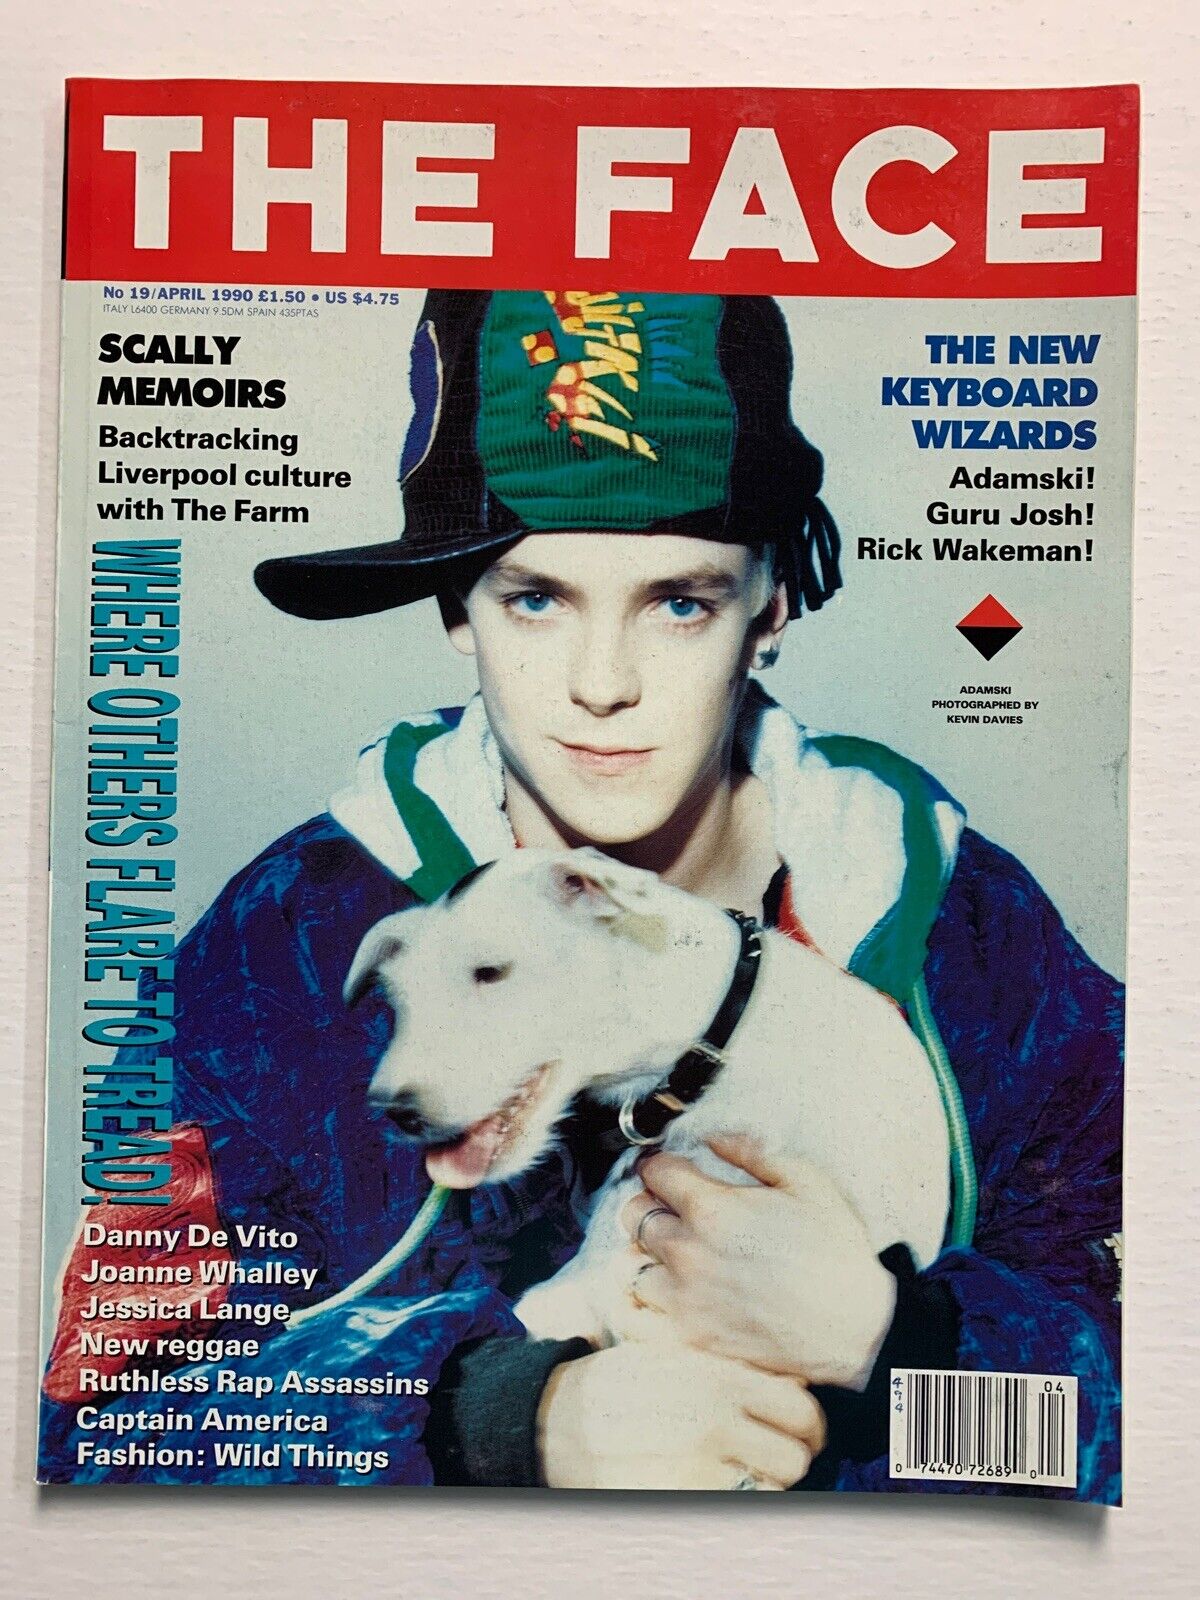 THE FACE Magazine April 1990 - Rick Wakeman, Danny De Vito